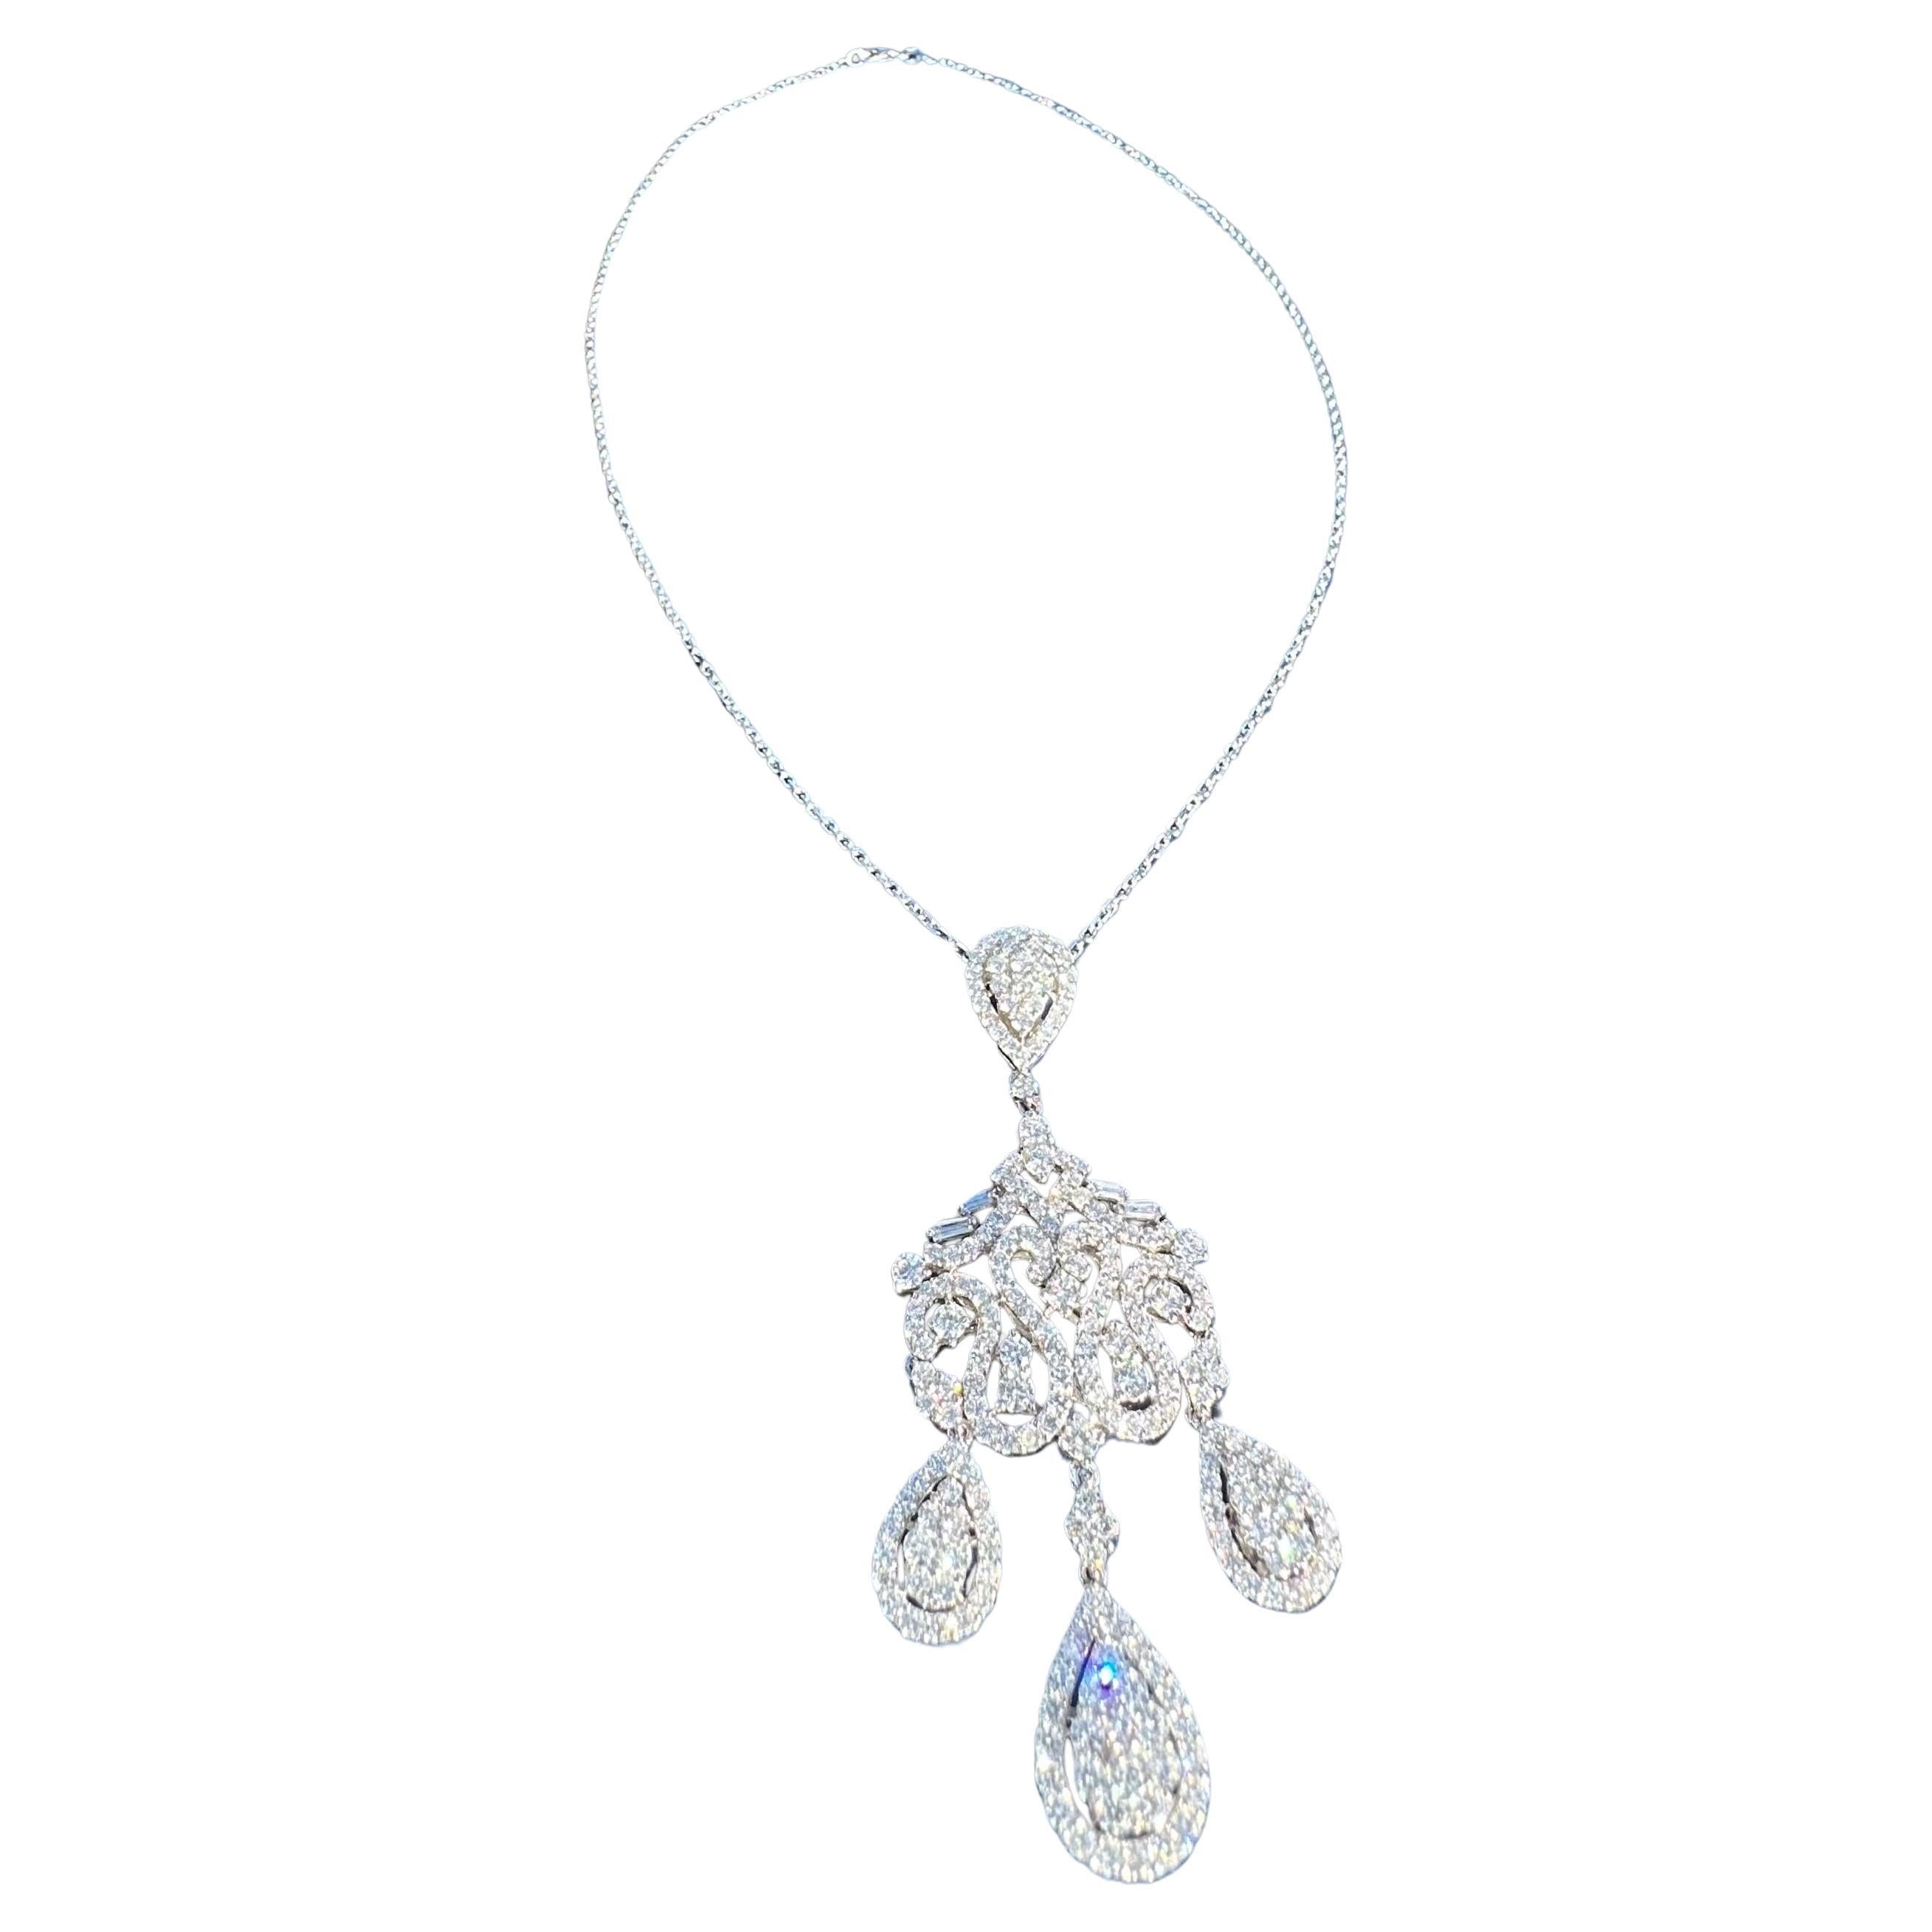 Exquisite 18 Karat White Gold 9.76 Carat Diamond Chandelier Pendant Necklace 